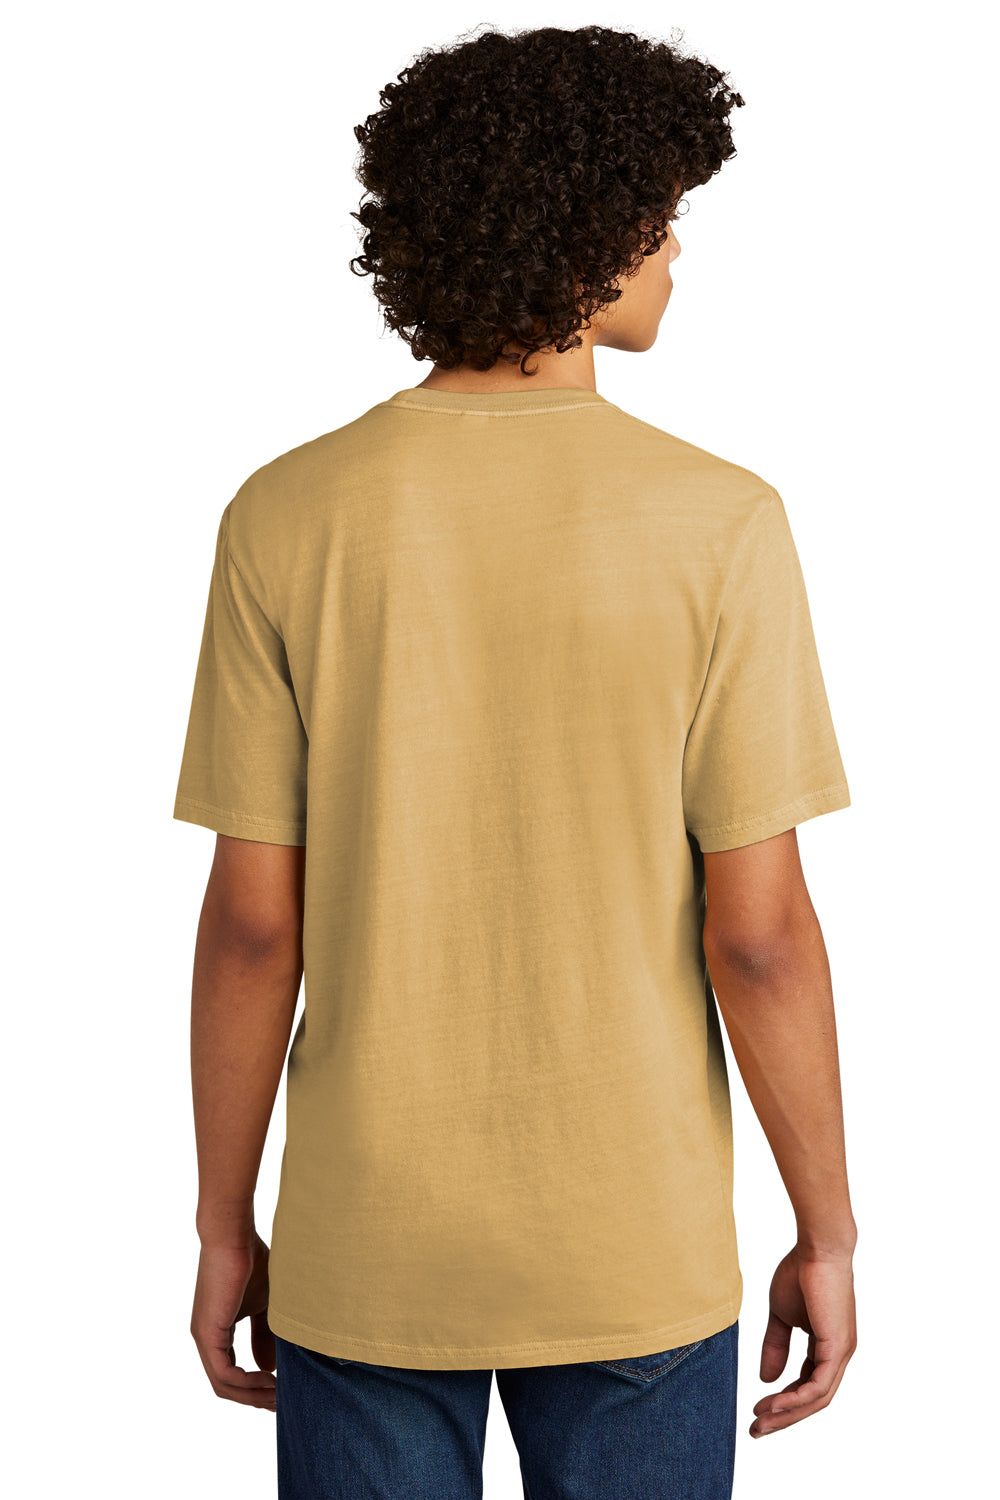 Allmade AL2400 Mens Mineral Dye Short Sleeve Crewneck T-Shirt Golden Wheat Model Back